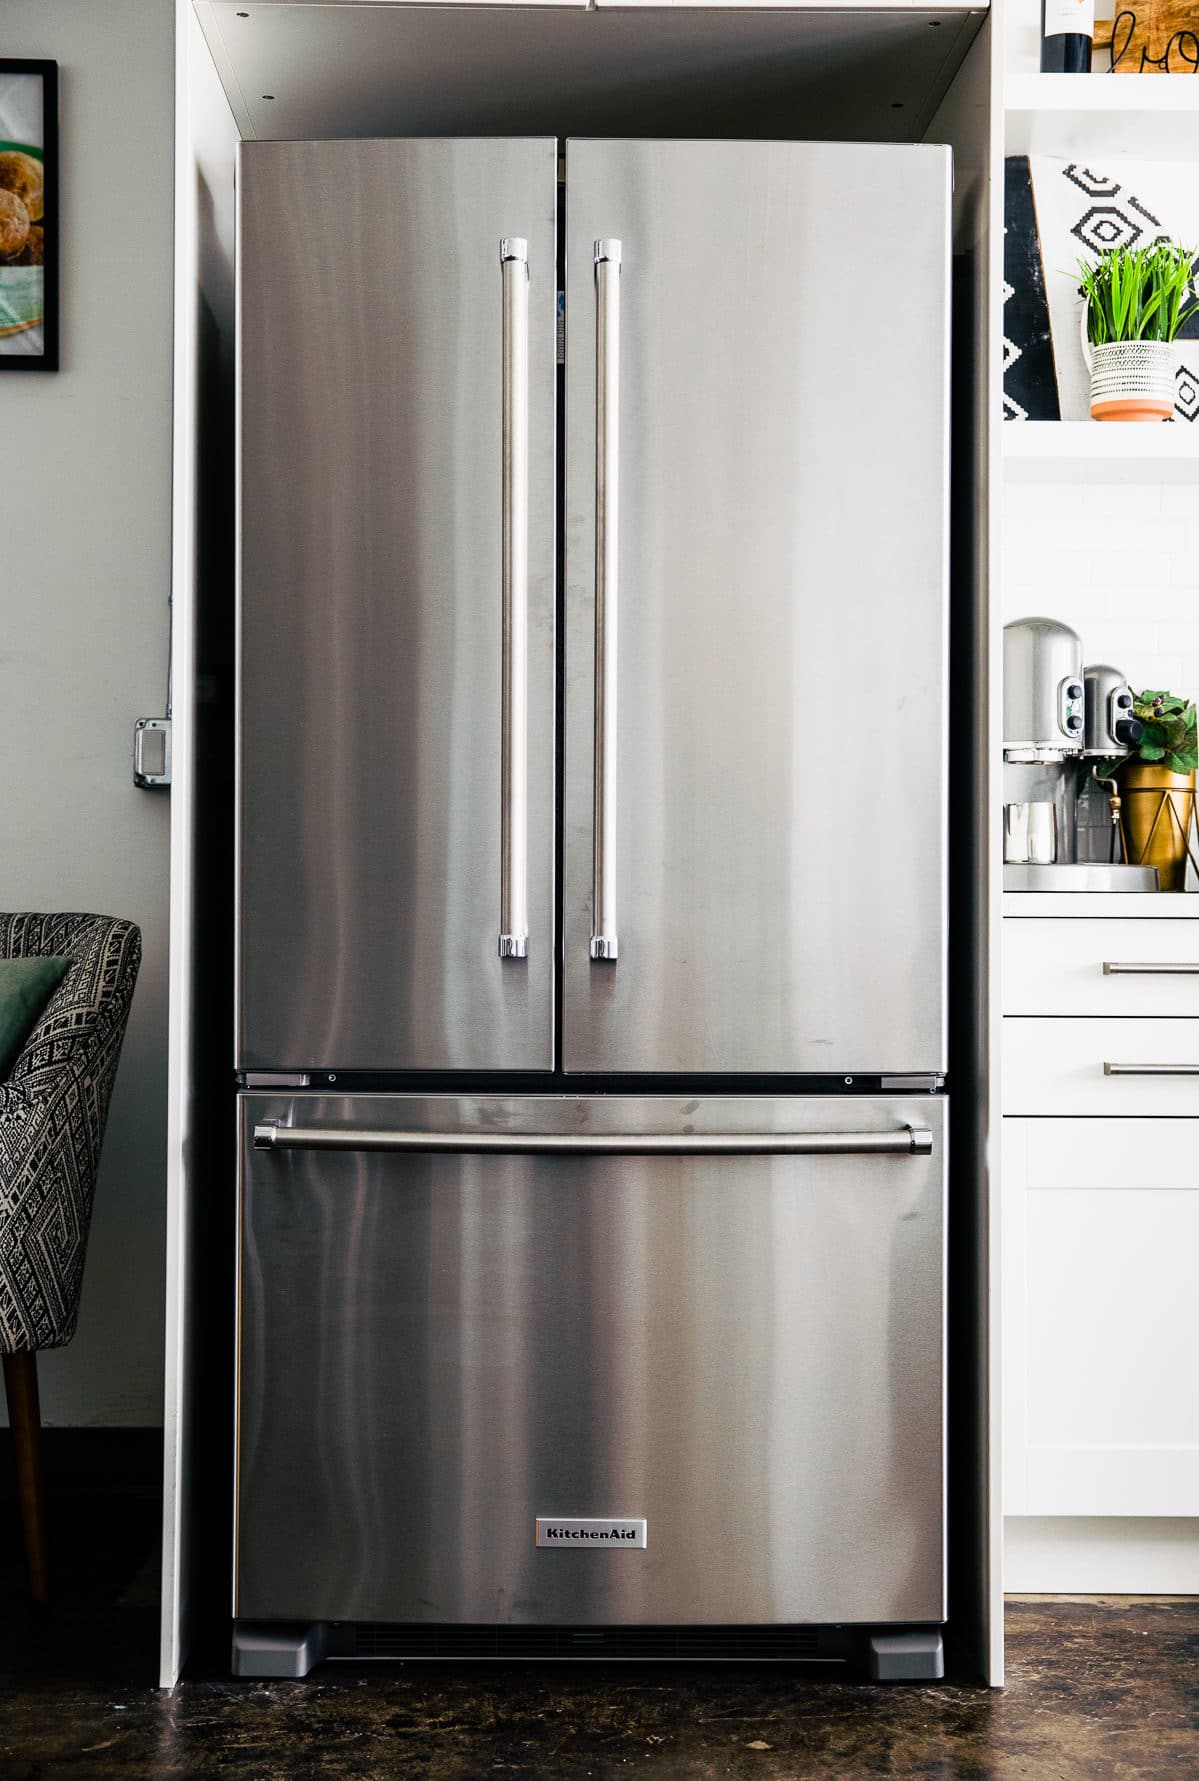 Silver KitchenAid double door refrigerator with white cupboards around